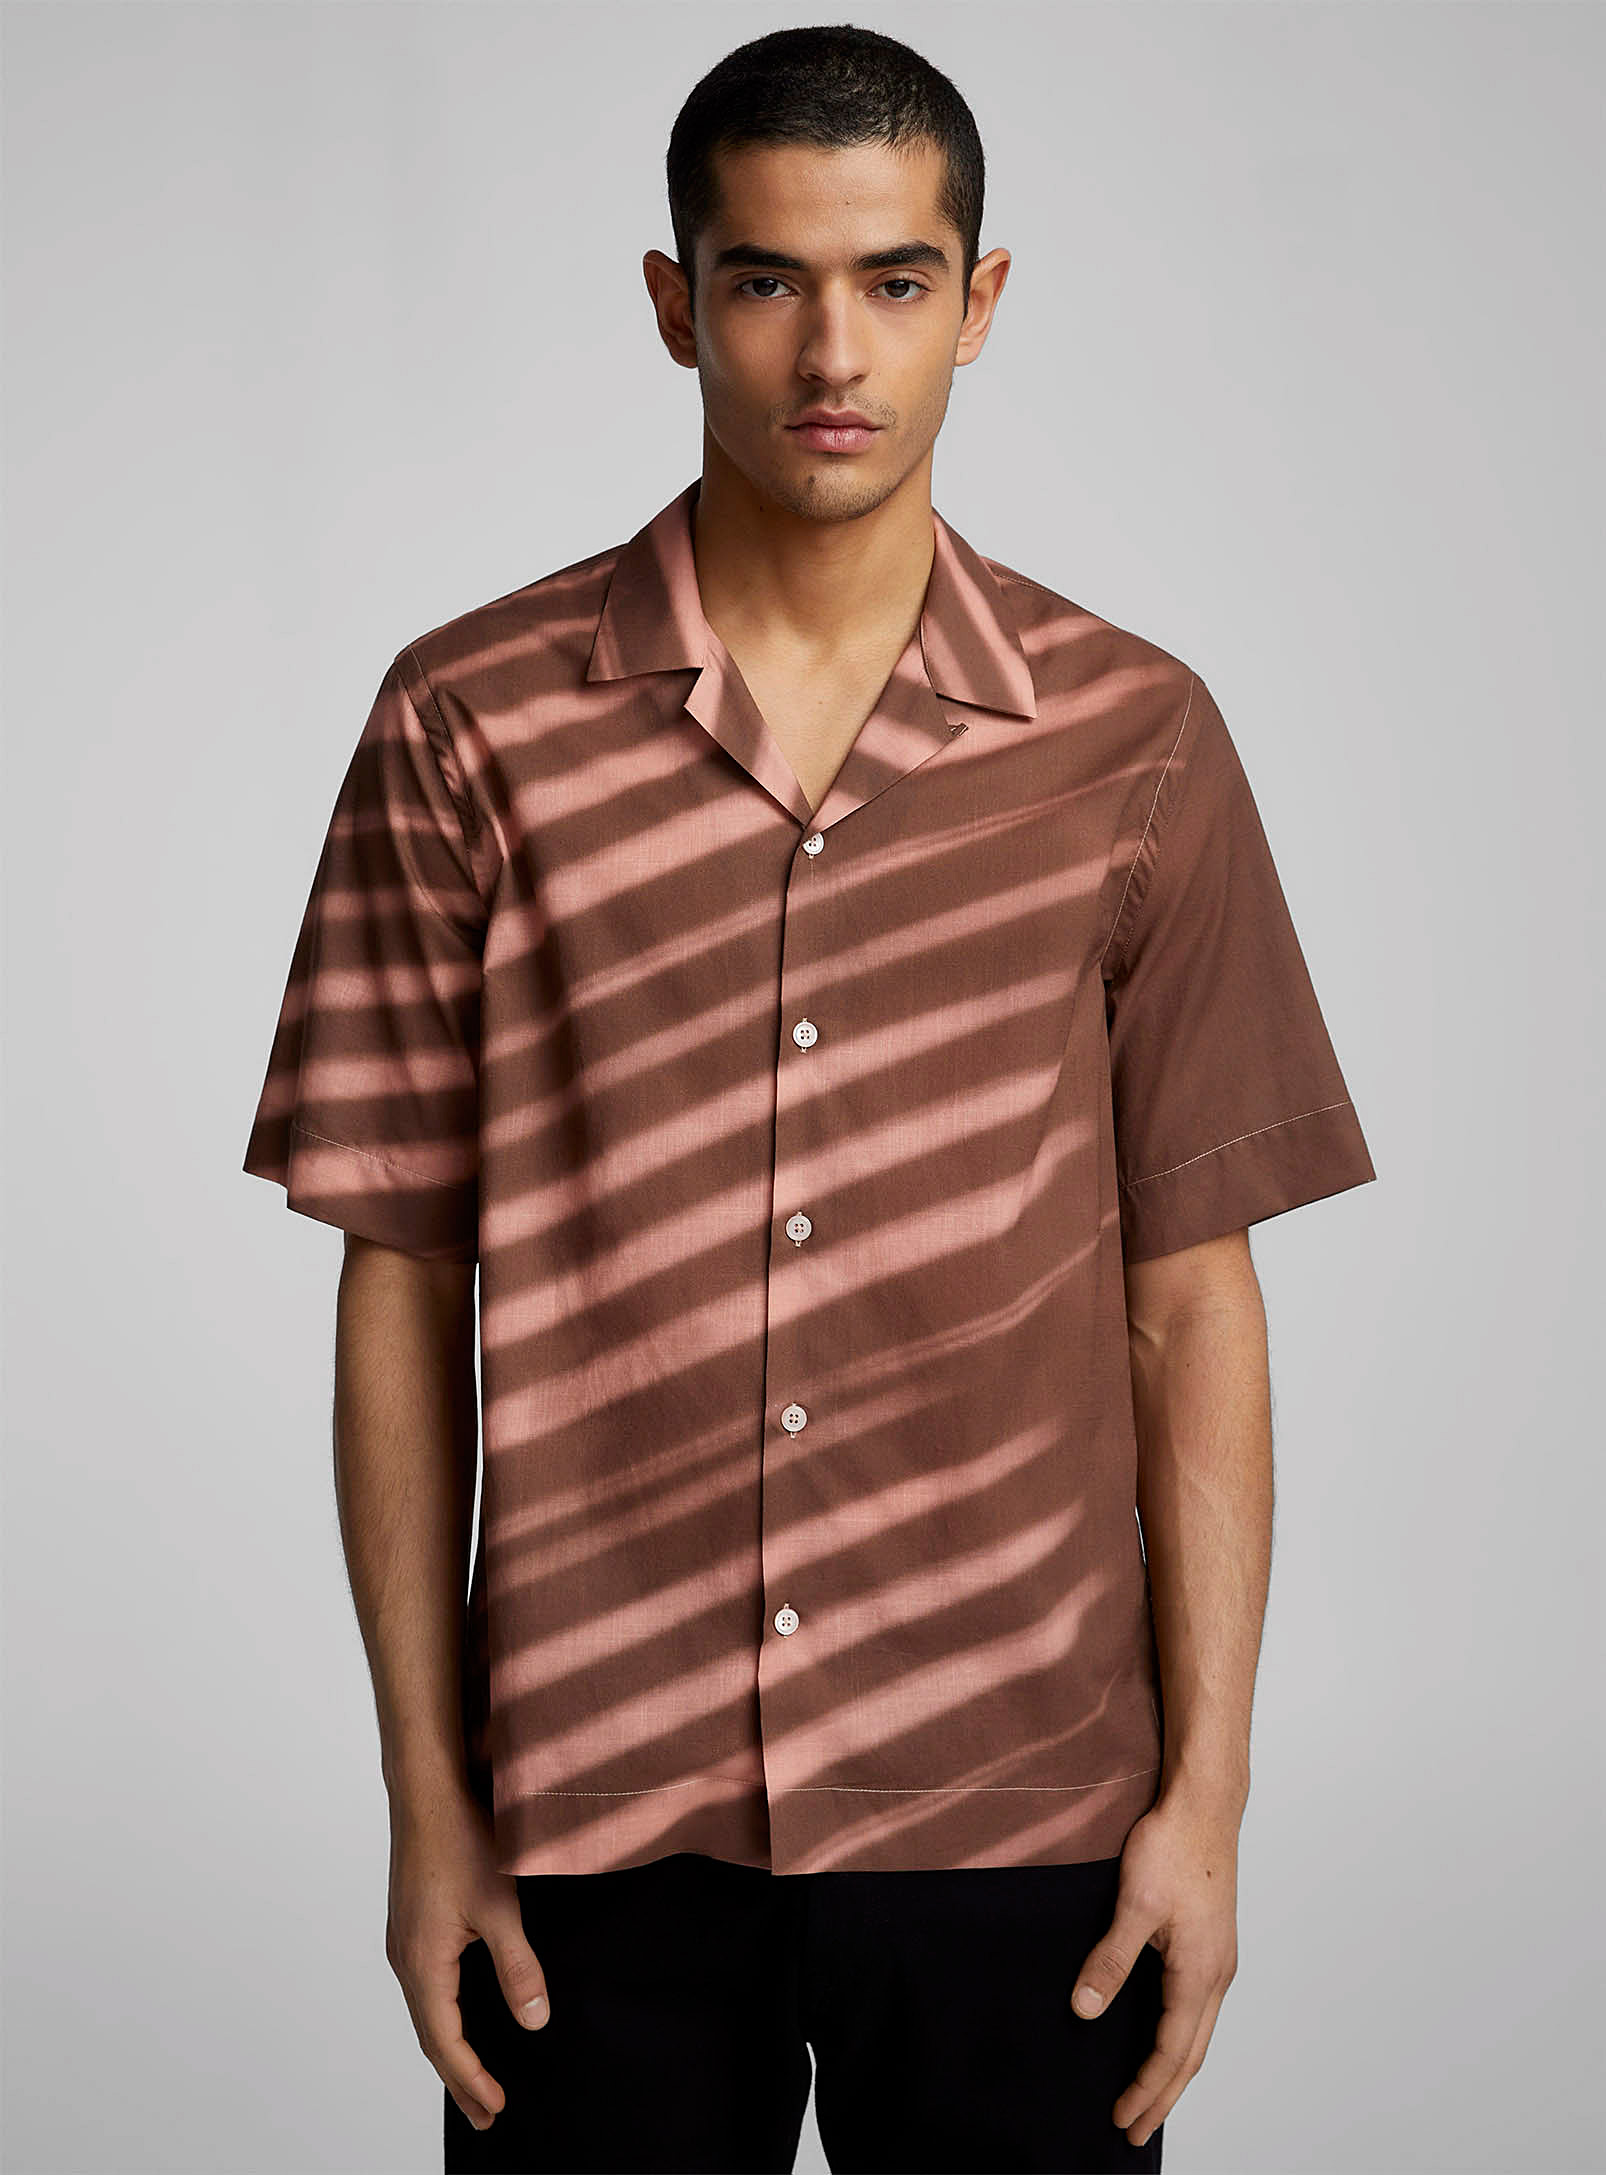 Paul Smith - Men's Faded stripes shirt